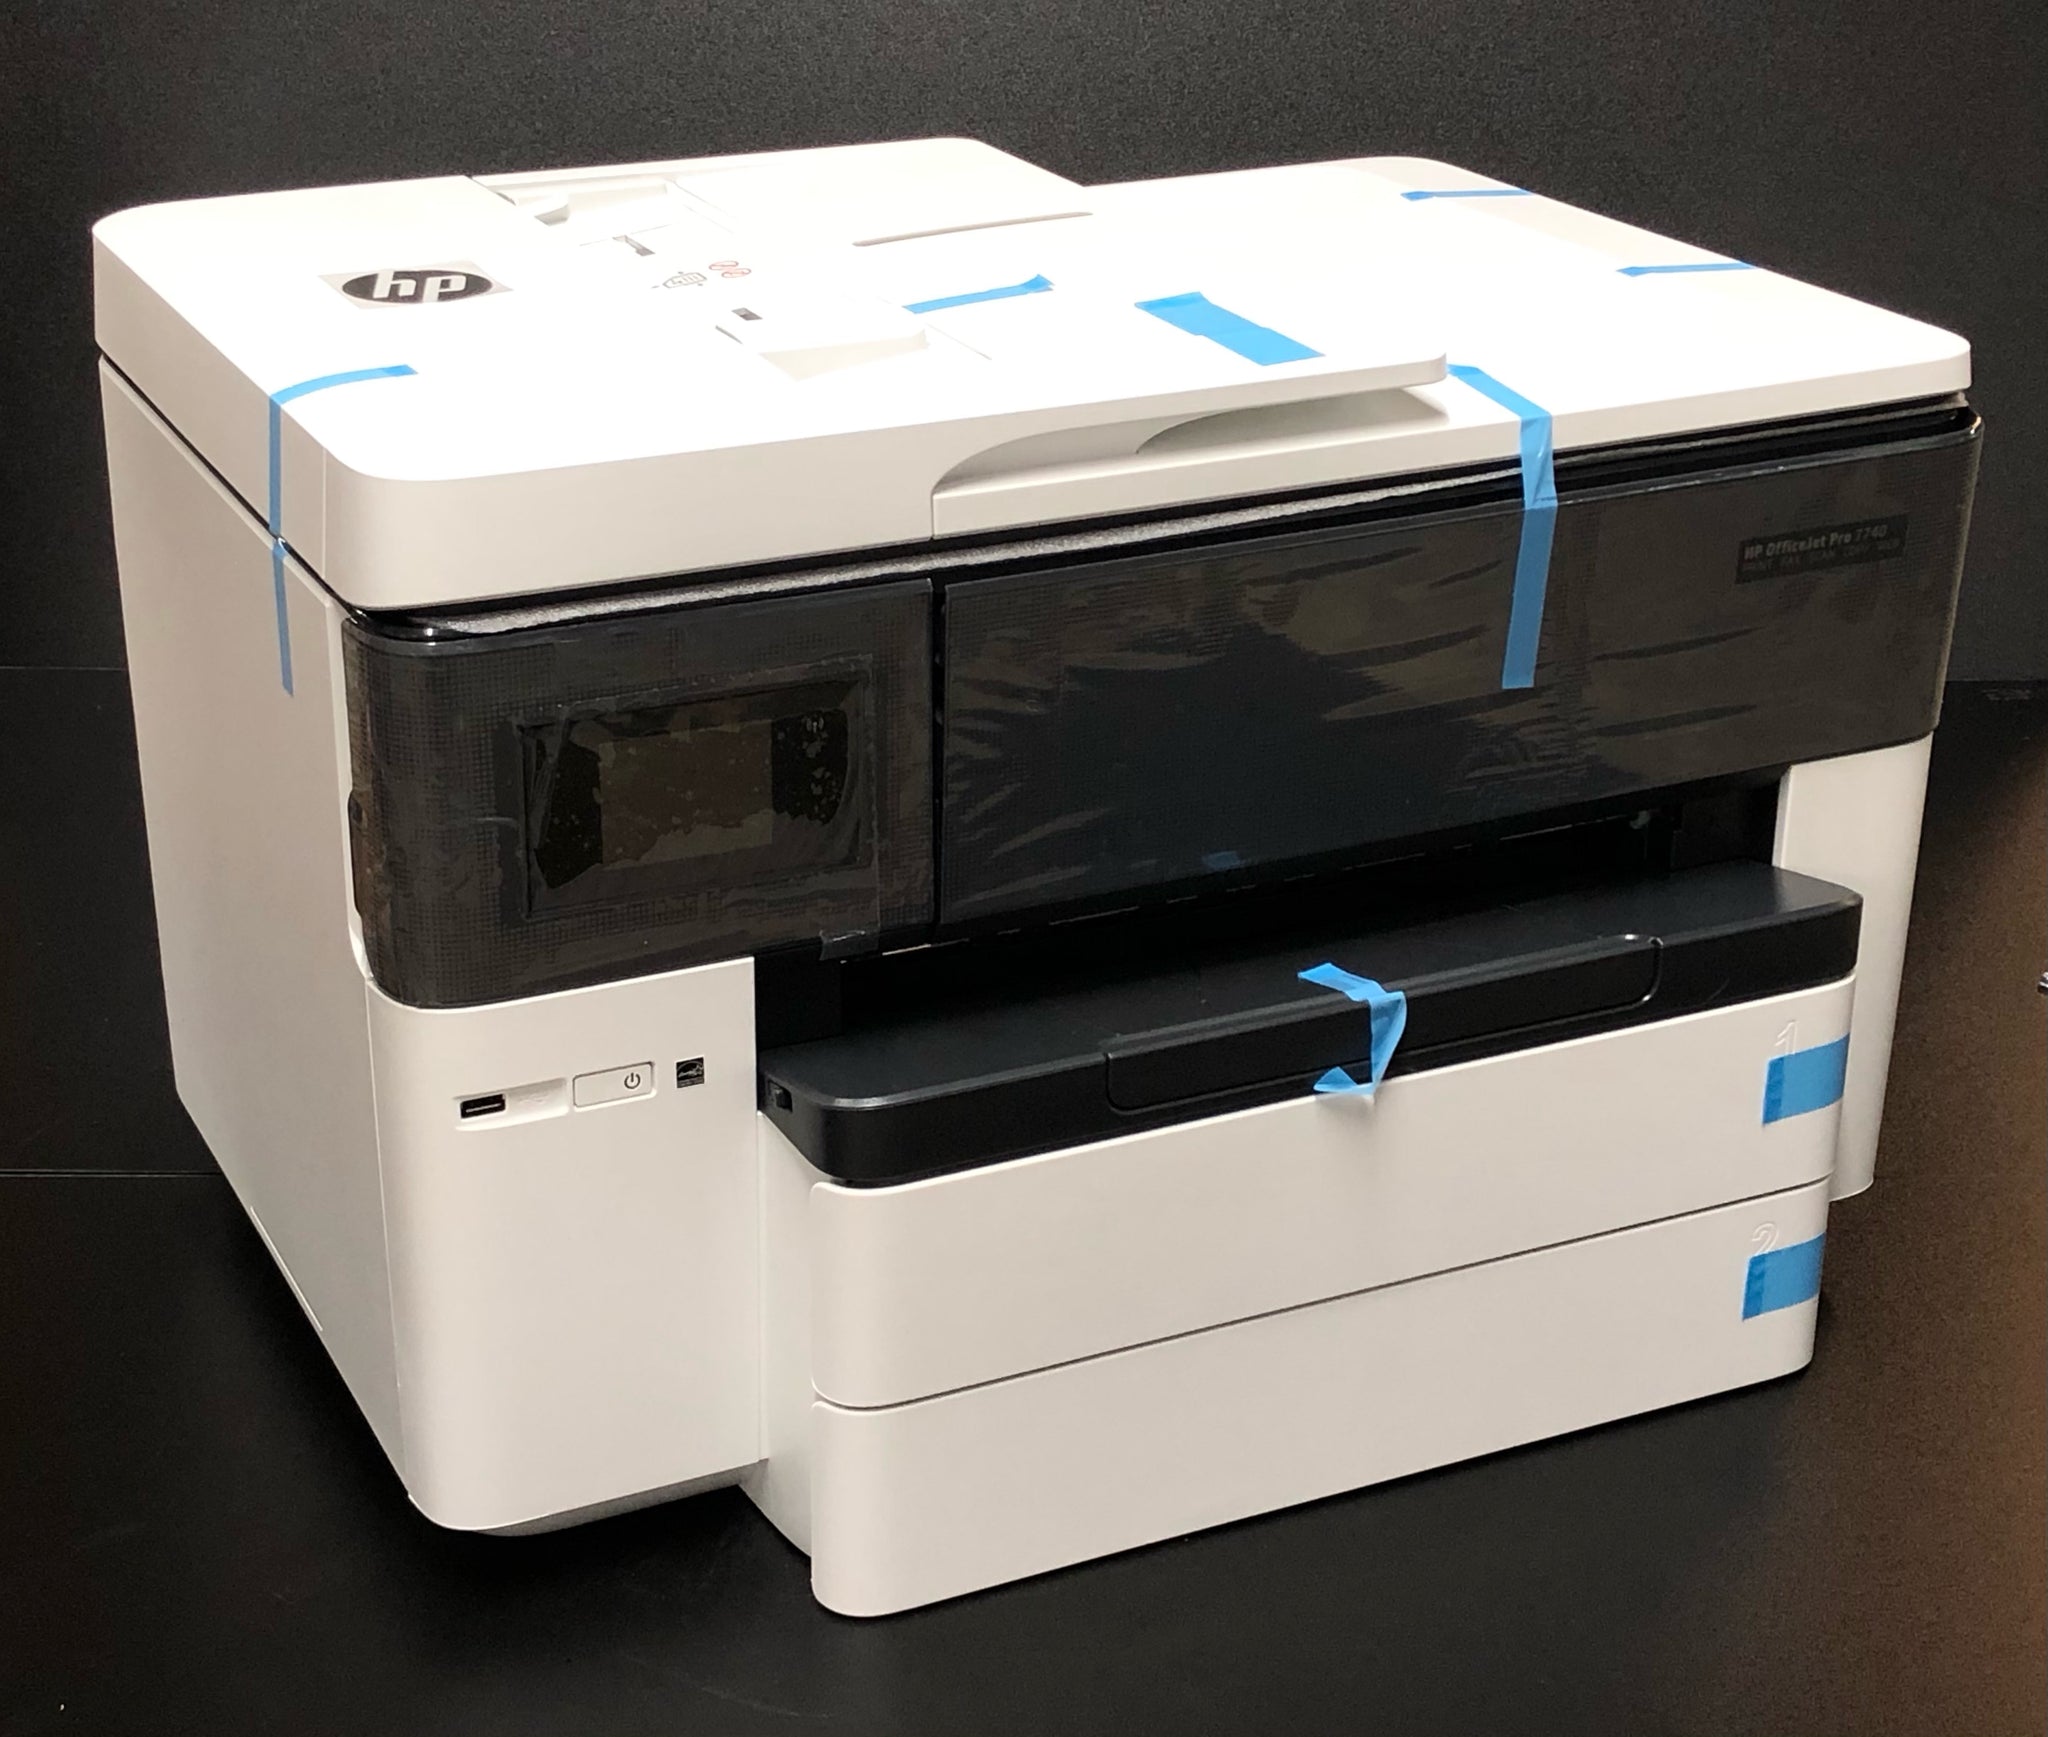 HP OfficeJet Pro 7740 Format All-in-One Colour Inkjet Printer (HP